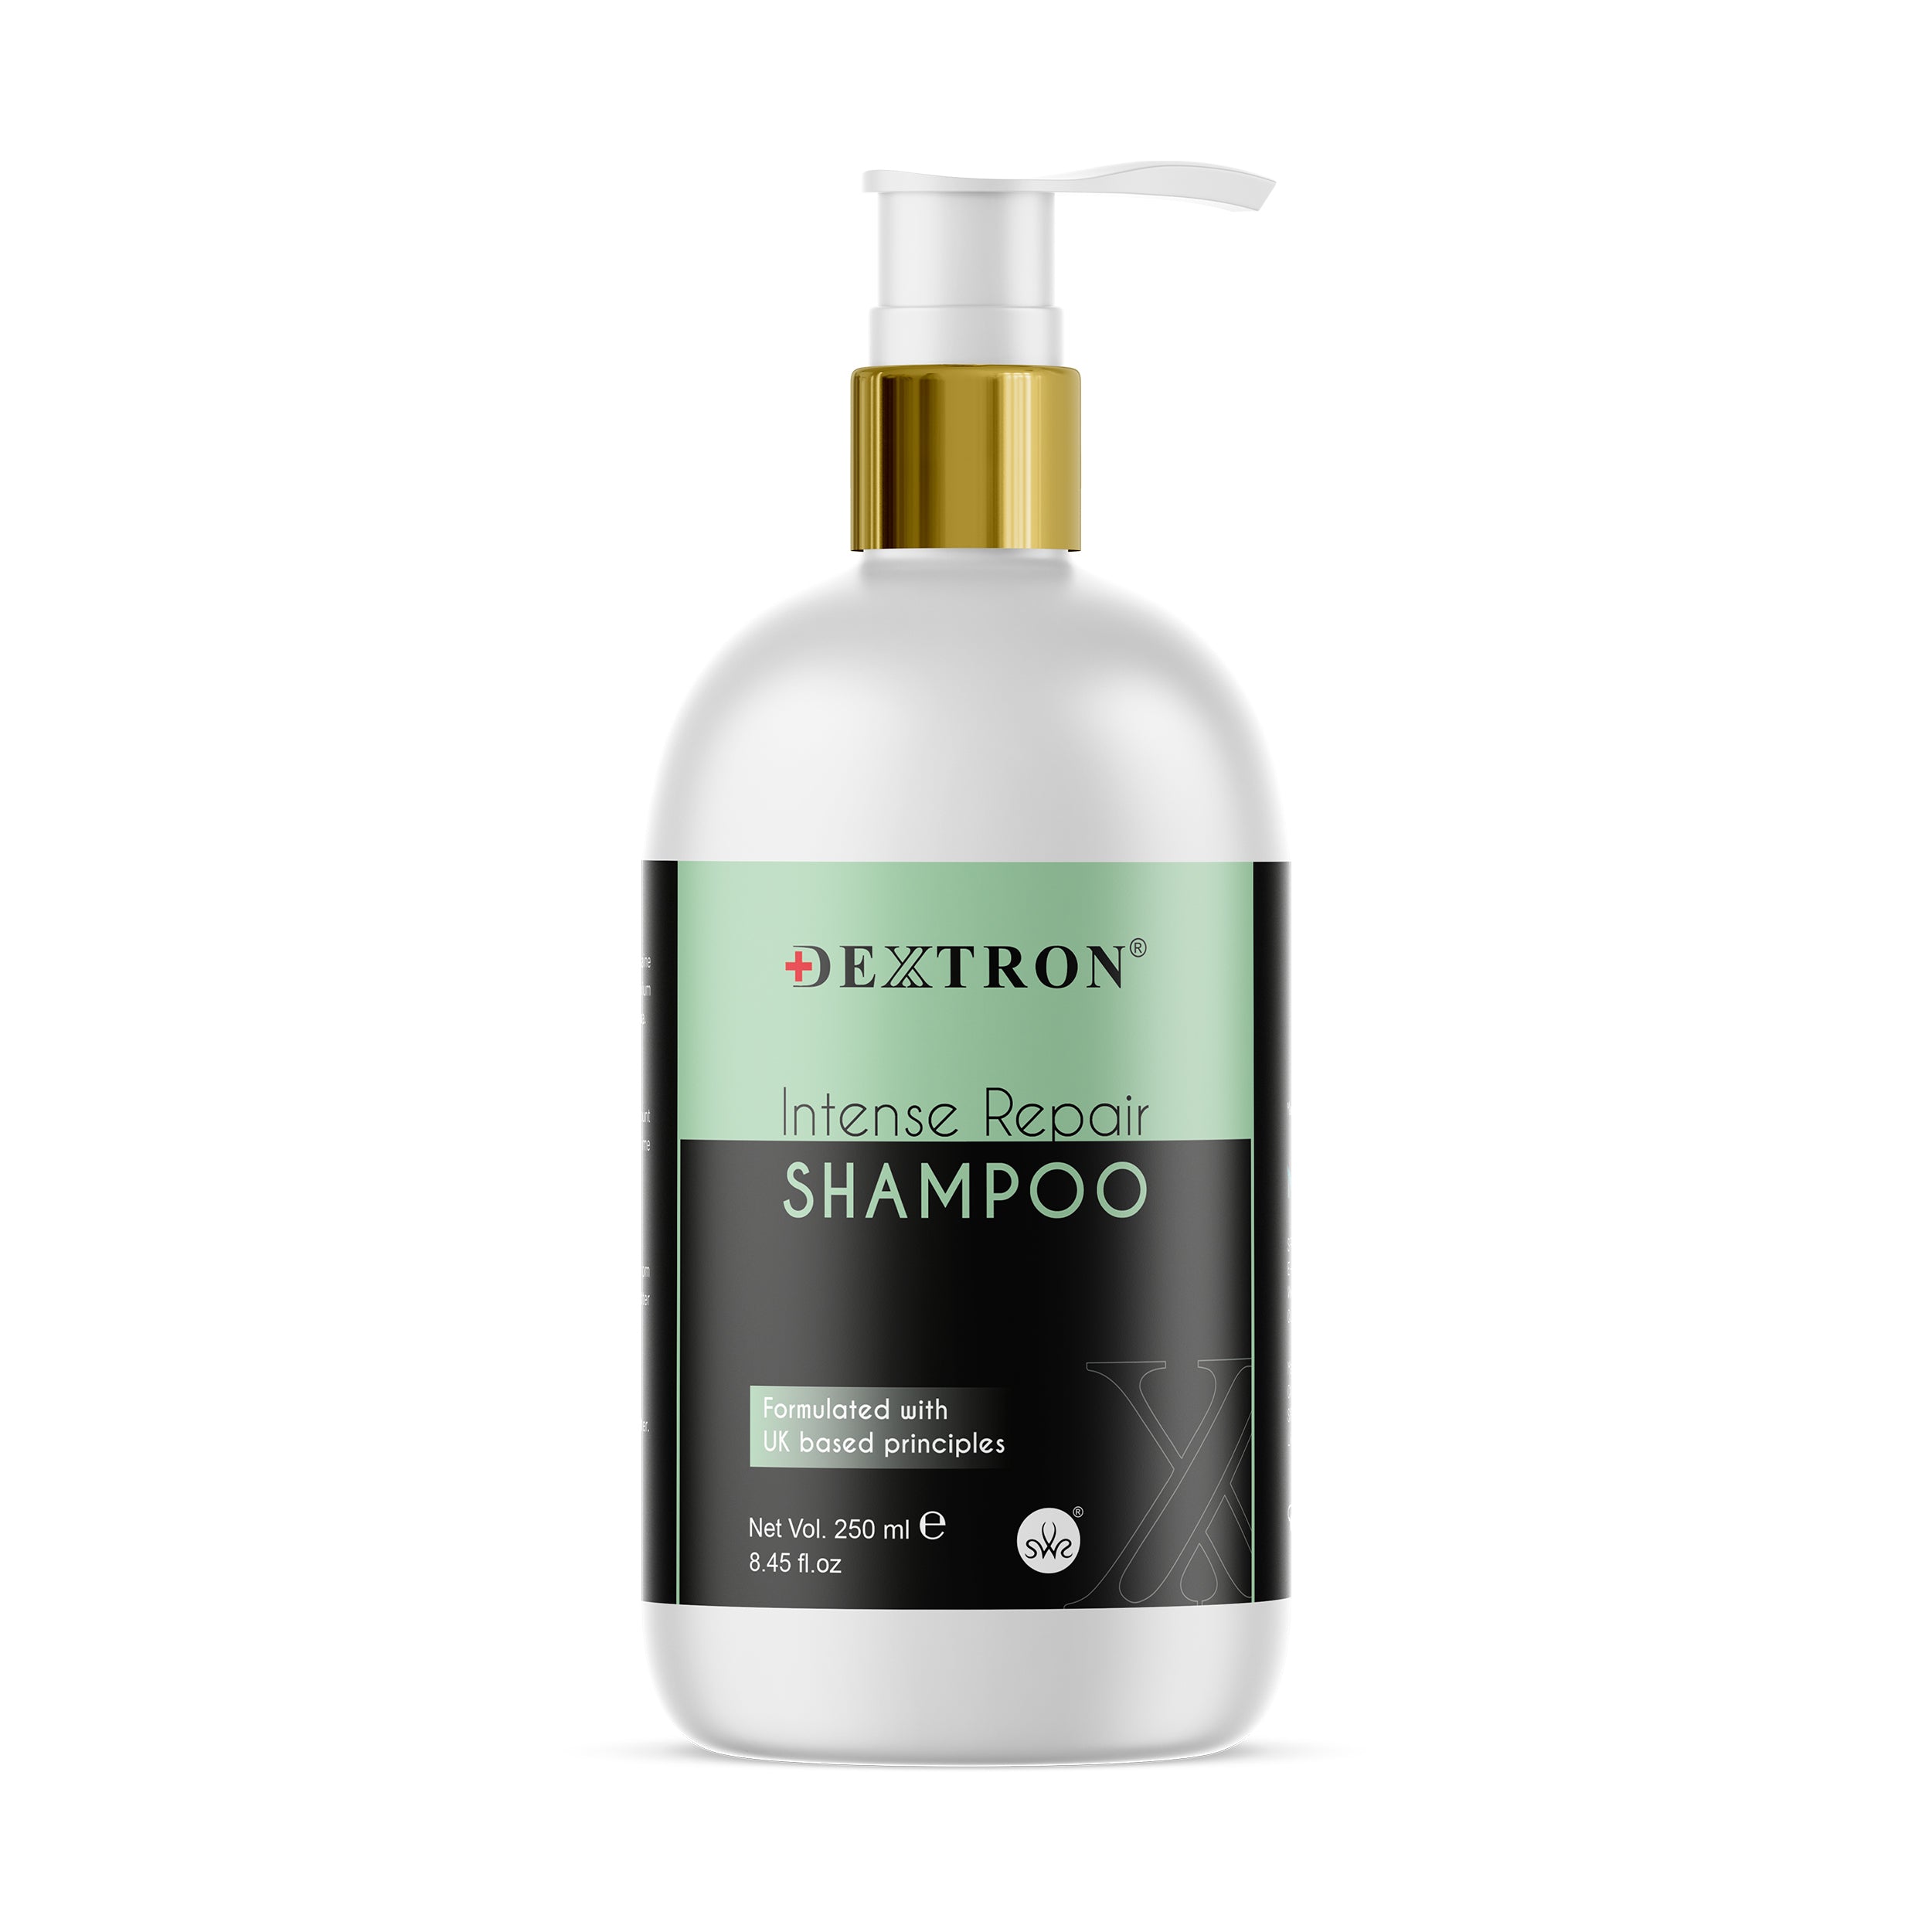 Intense Repair Shampoo with UK-Based Principles 250ml